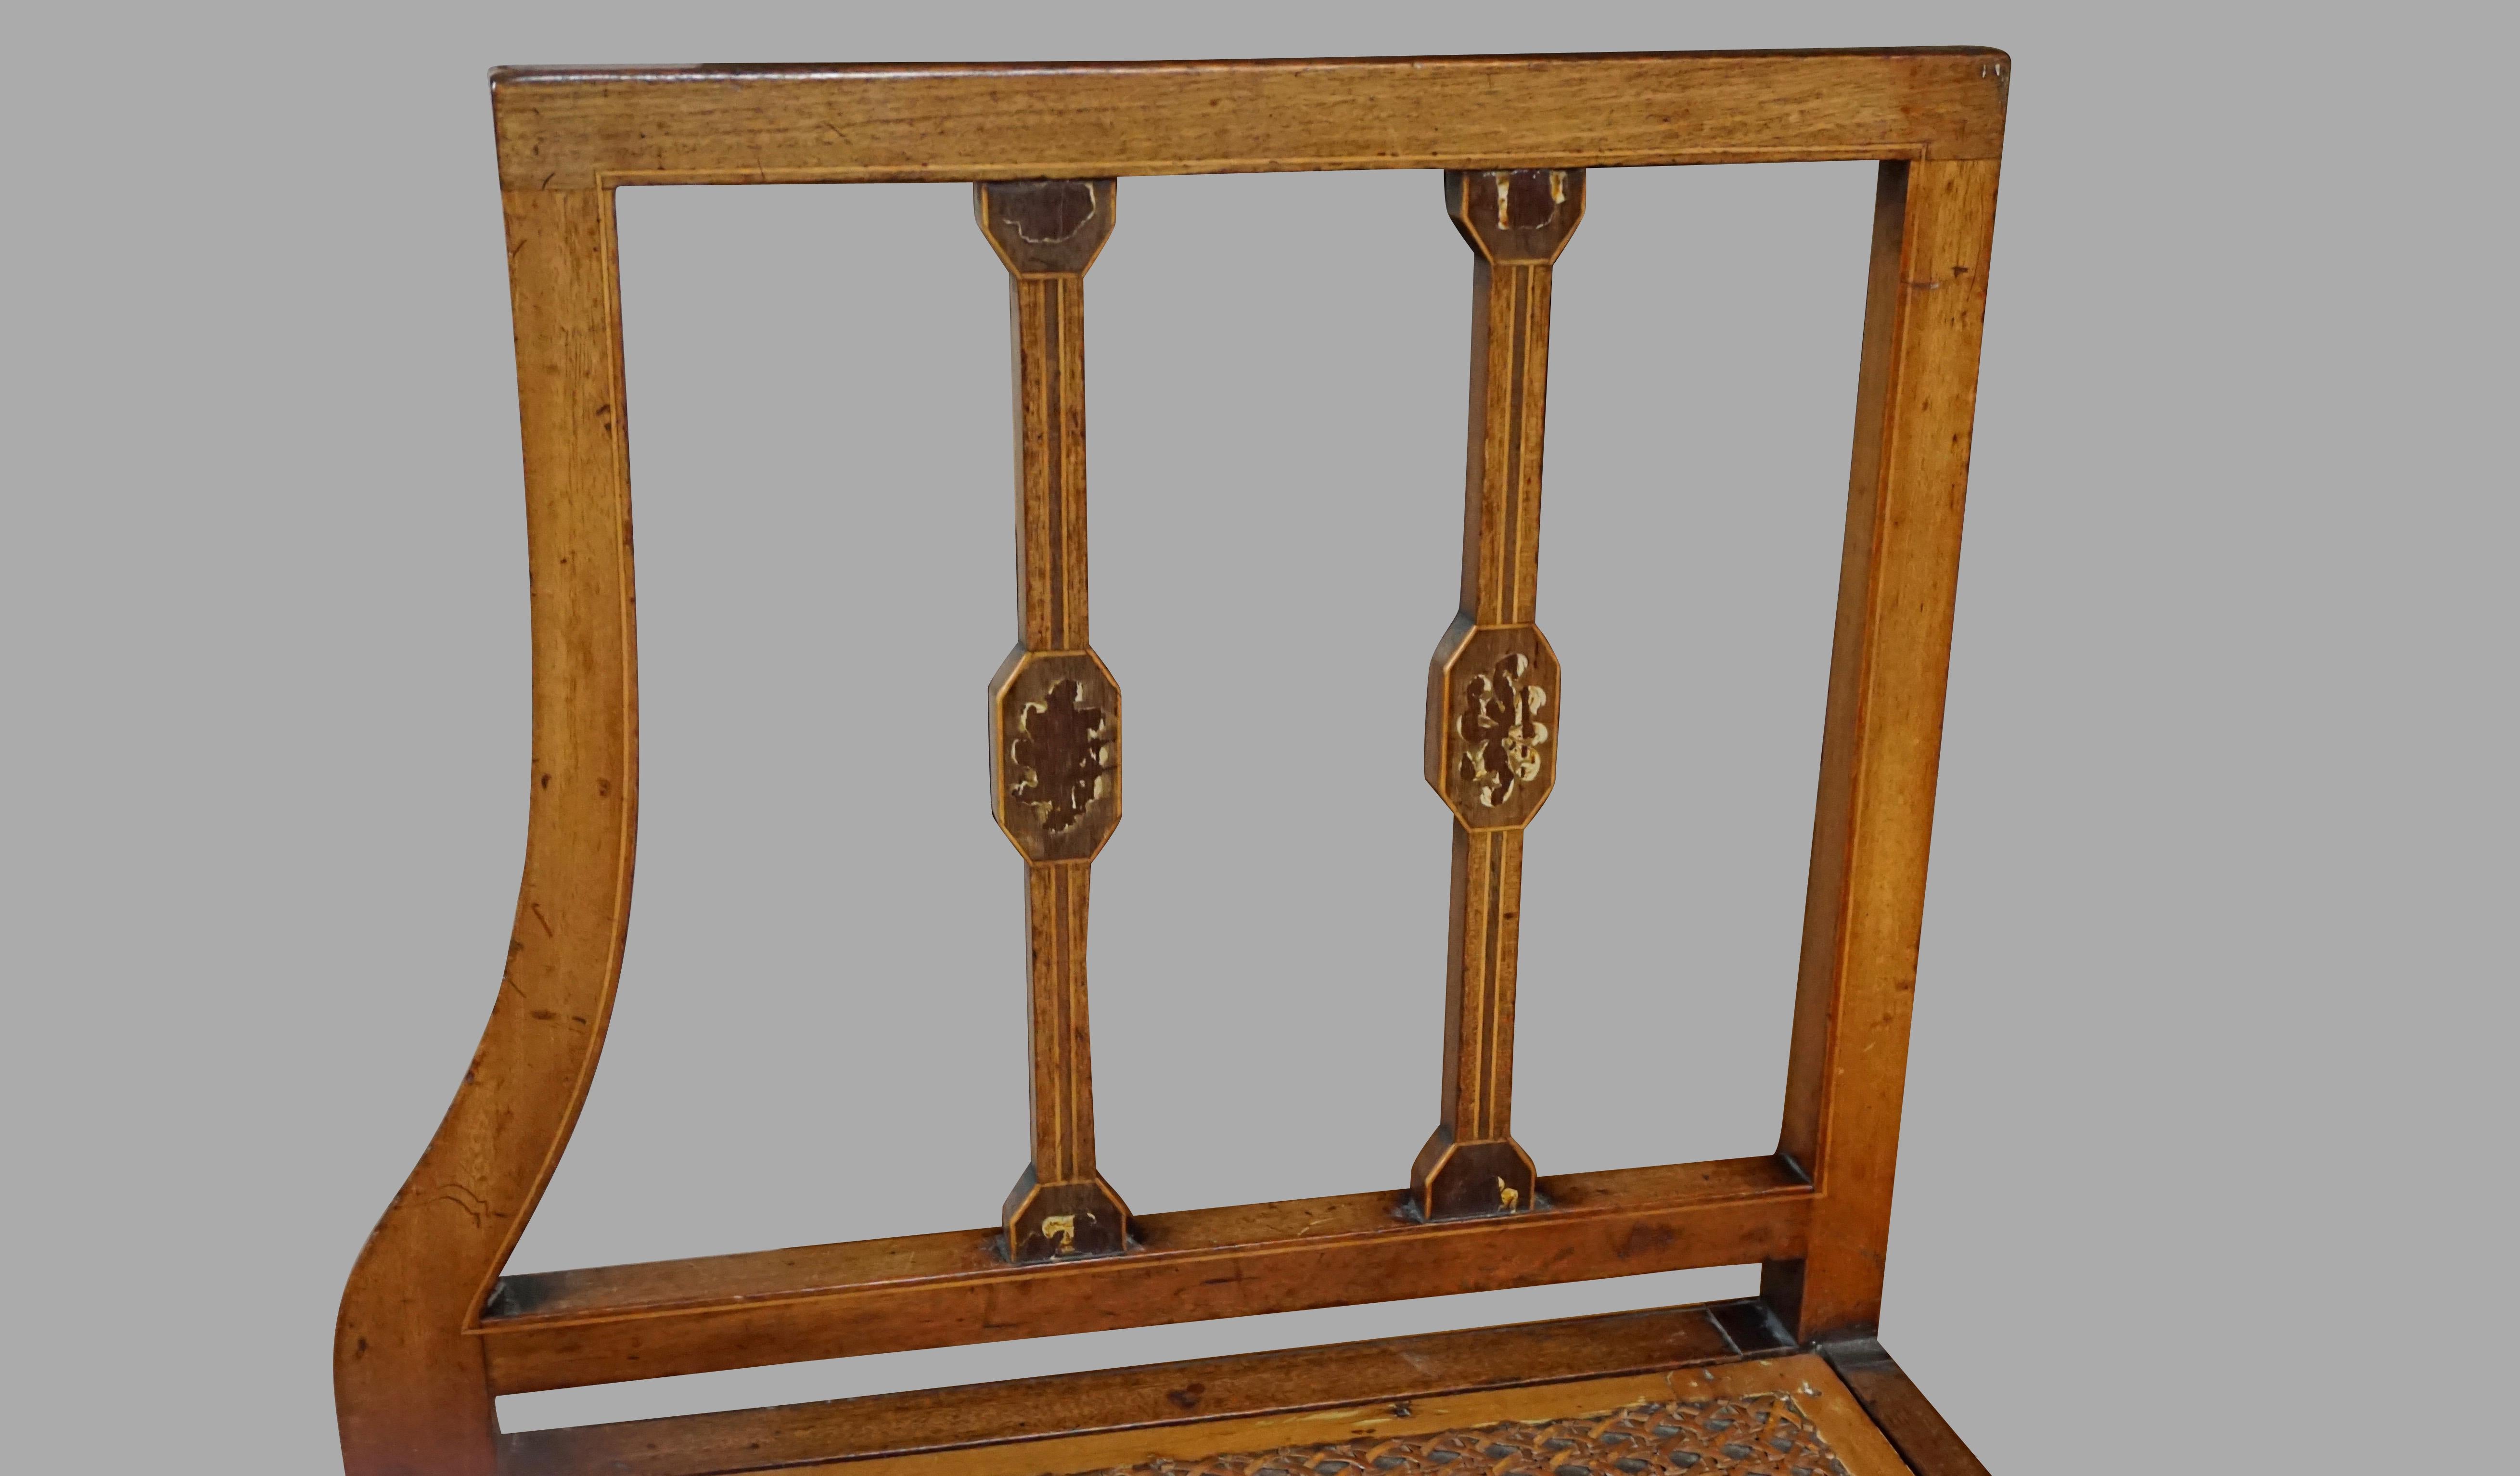 Early 19th Century English Hepplewhite Inlaid Mahogany Window Seat with Caned Seat